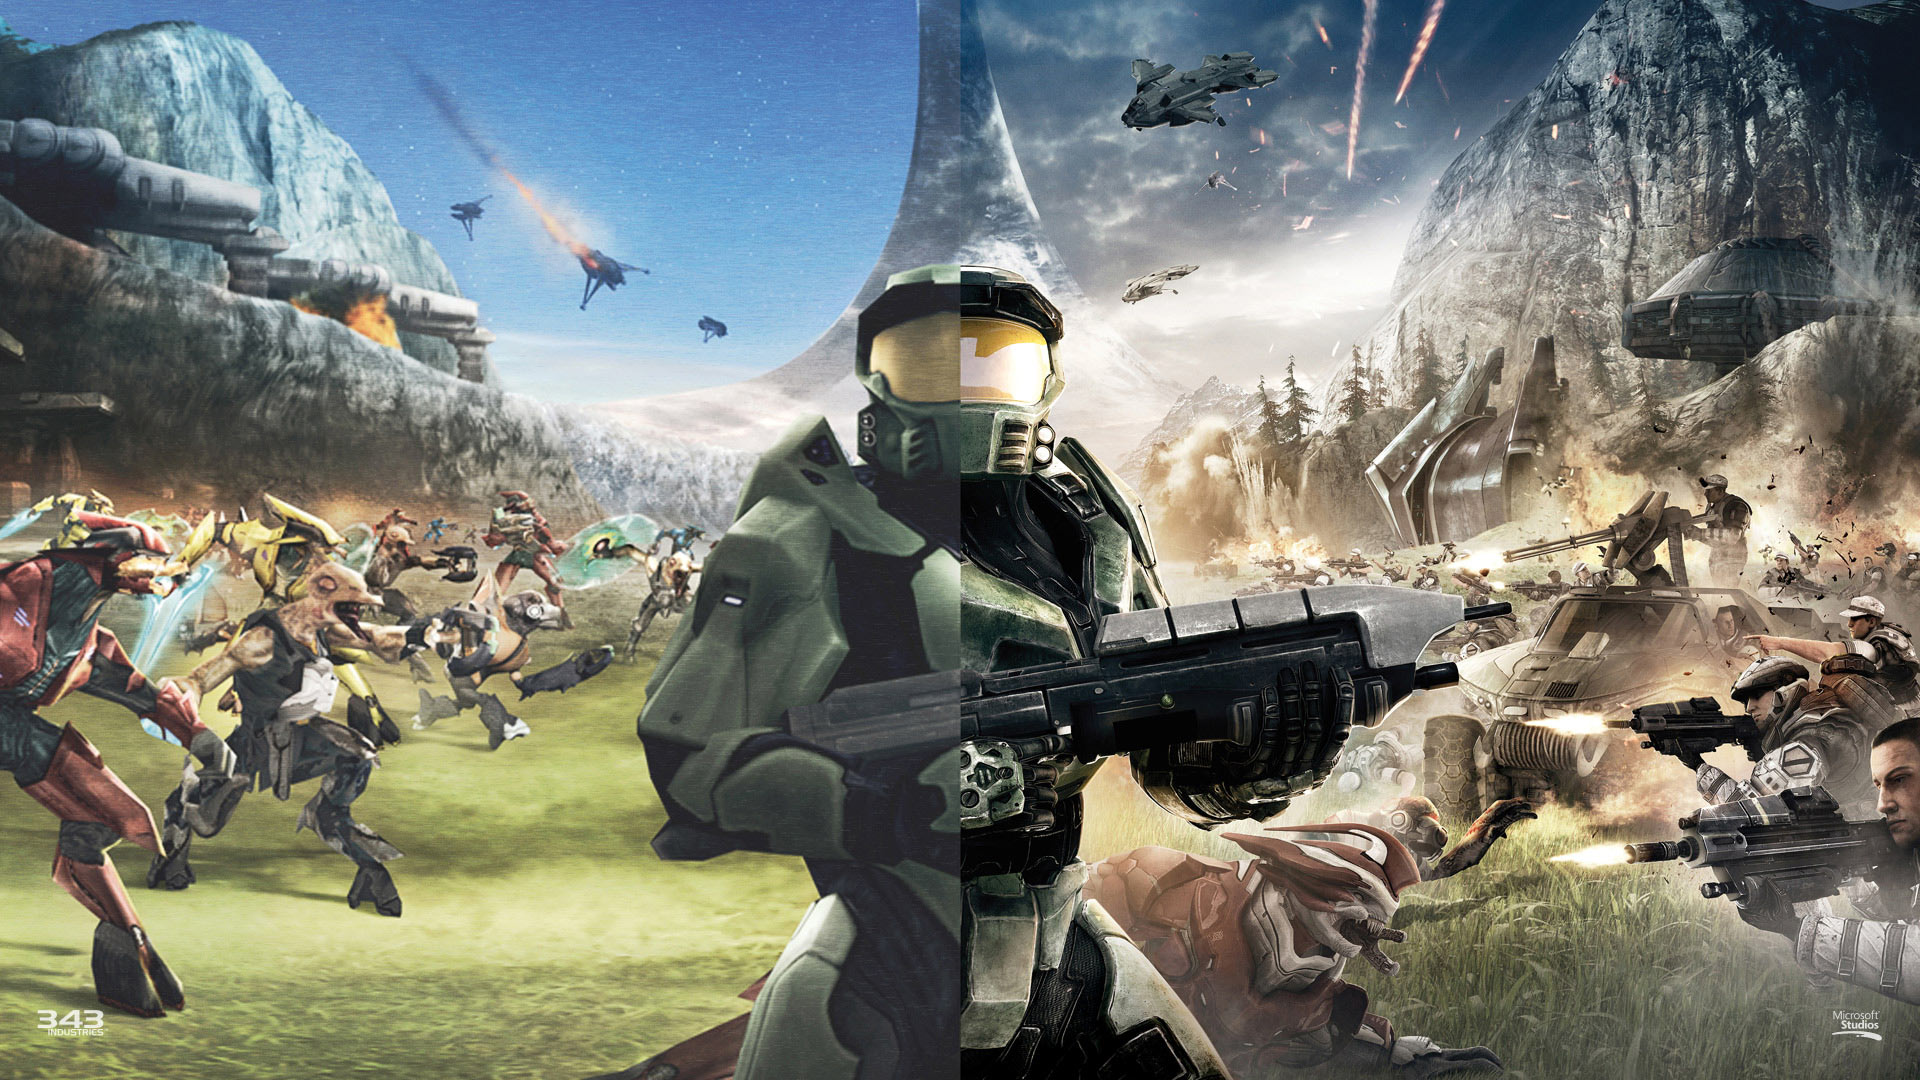 Halo 1 wallpaper